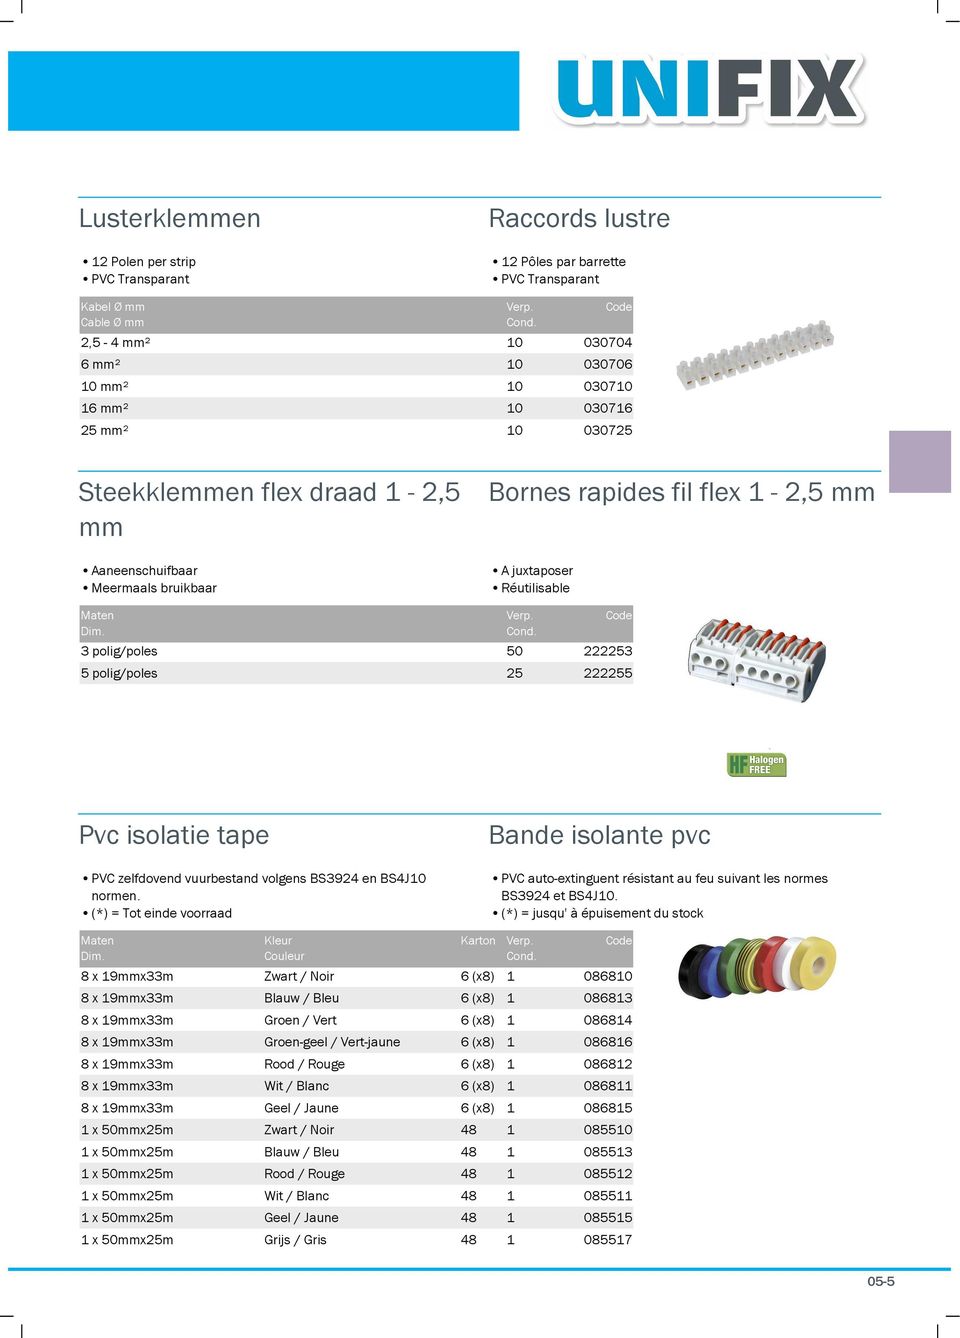 3 polig/poles 5 polig/poles 2223 2225 Pvc isolatie tape PVC zelfdovend vuurbestand volgens BS3924 en BS4J0 normen.